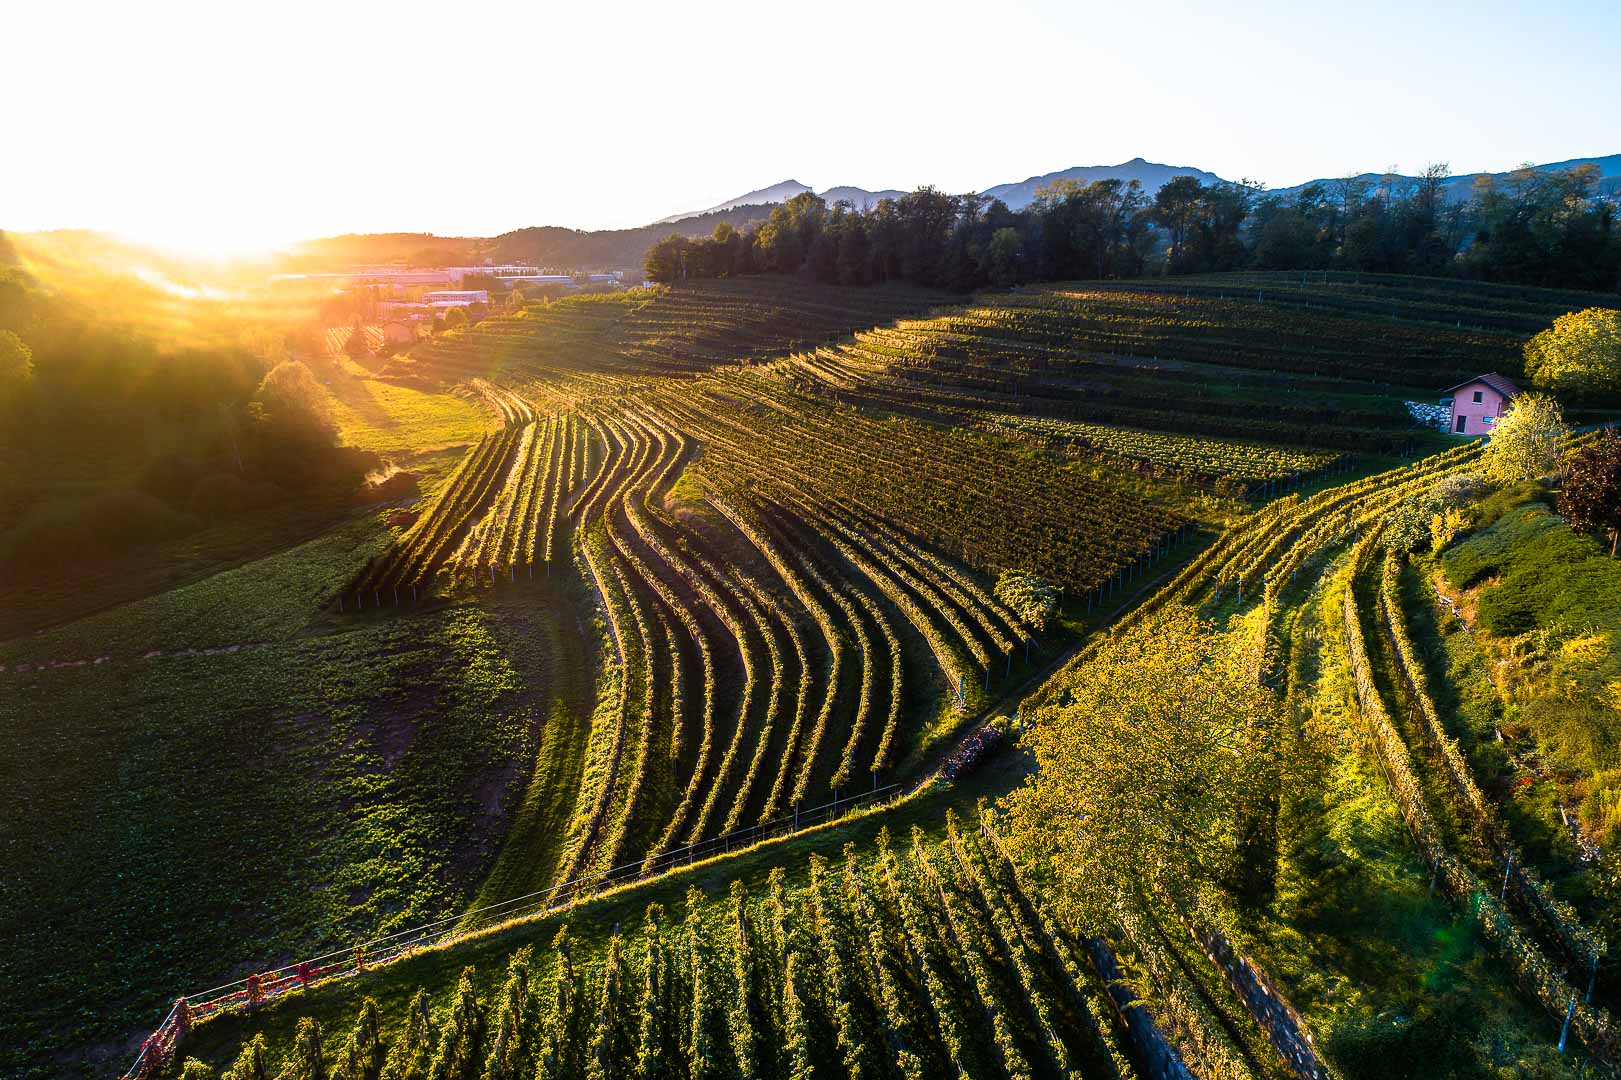 Agriloro – Award Winning Wines from the Ticino